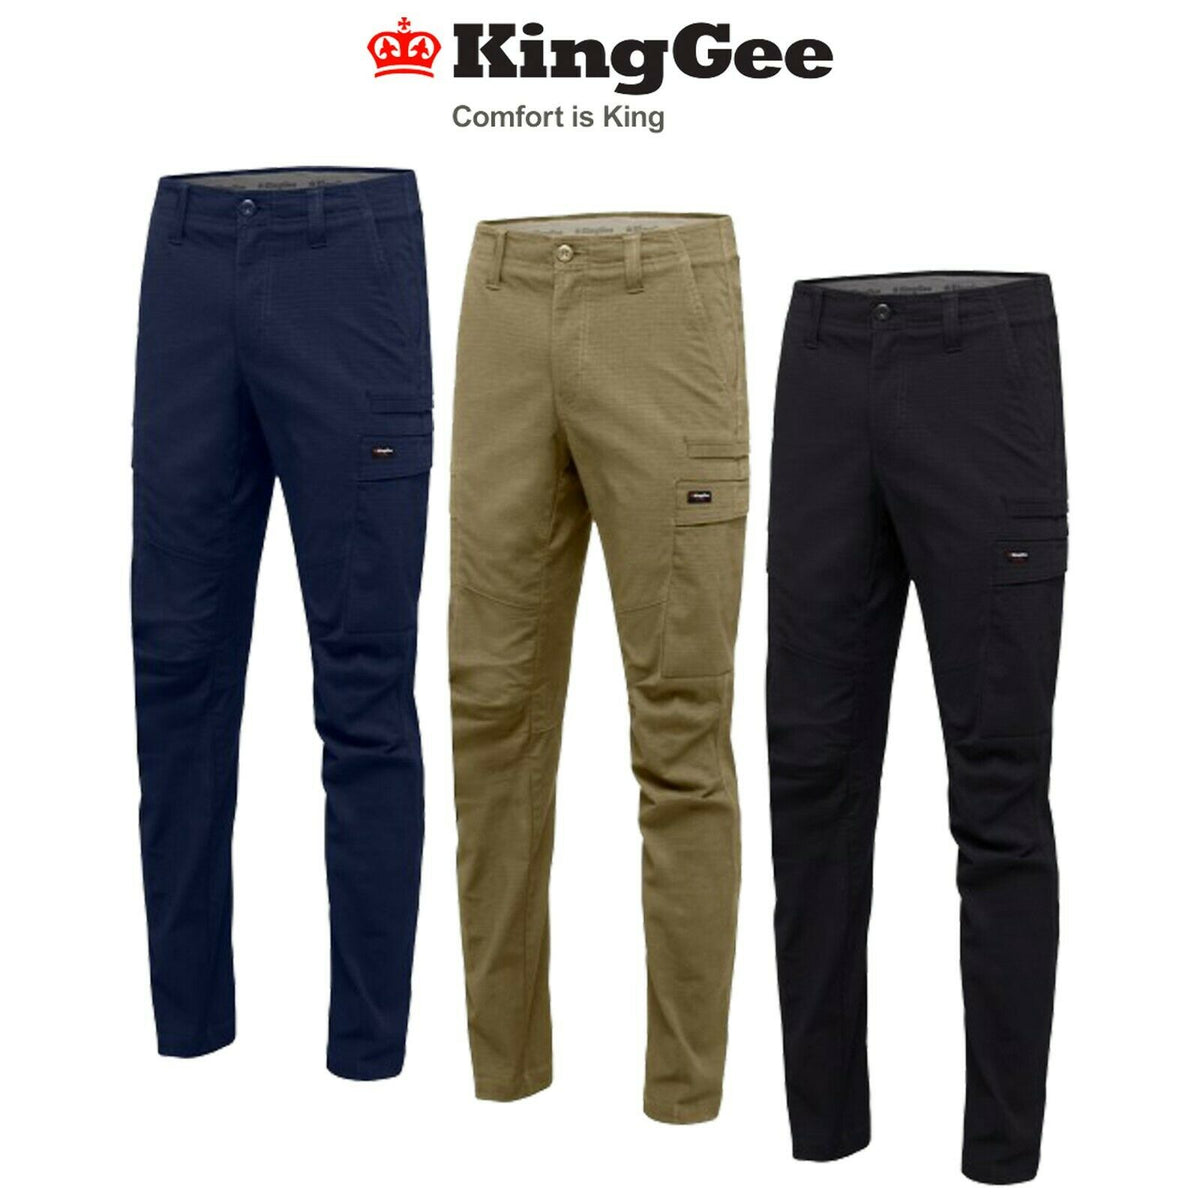 KingGee Workcool Pro Pant Pants Work King Gee Comfort Stretch Ripstop K13026